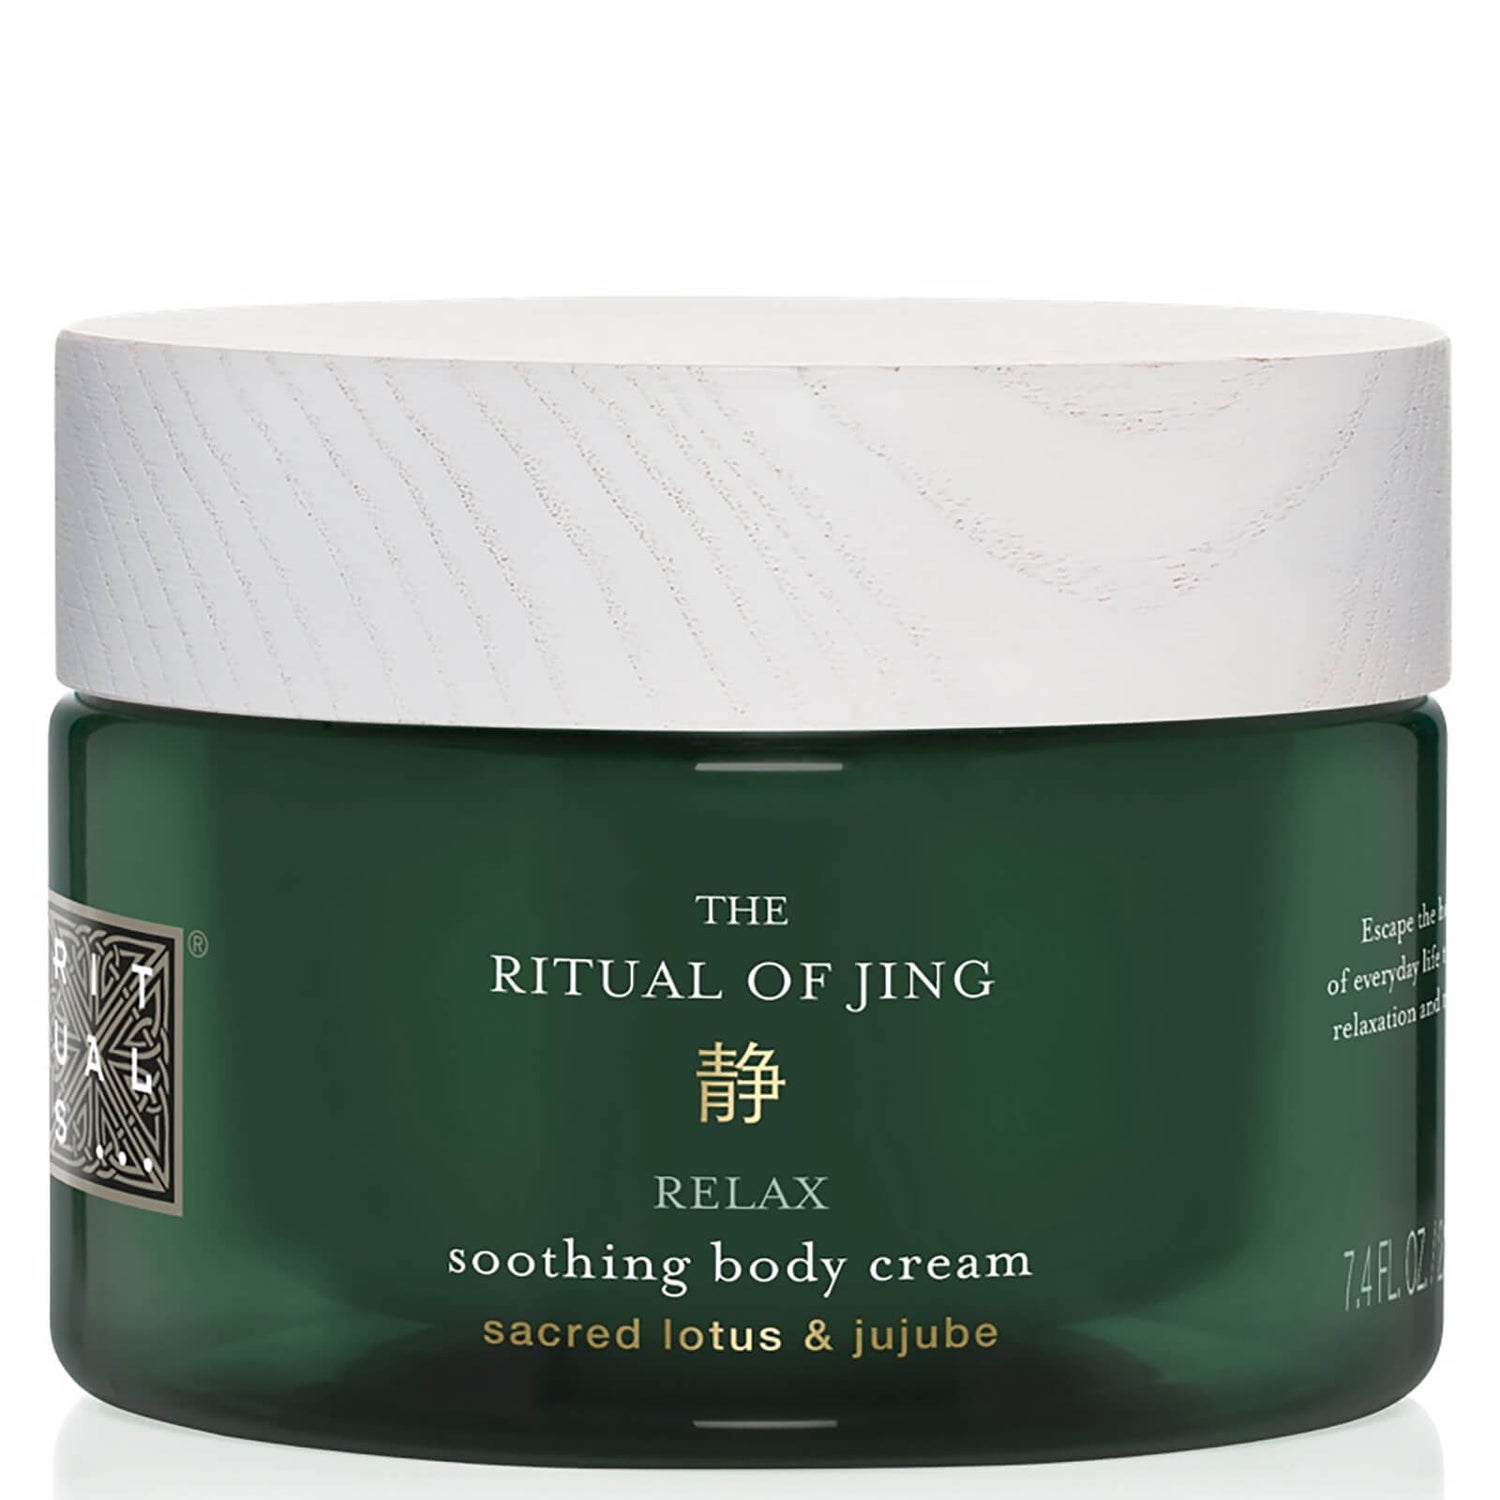 RITUALS The Ritual of Jing Body Cream, kroppskrem 220 ml